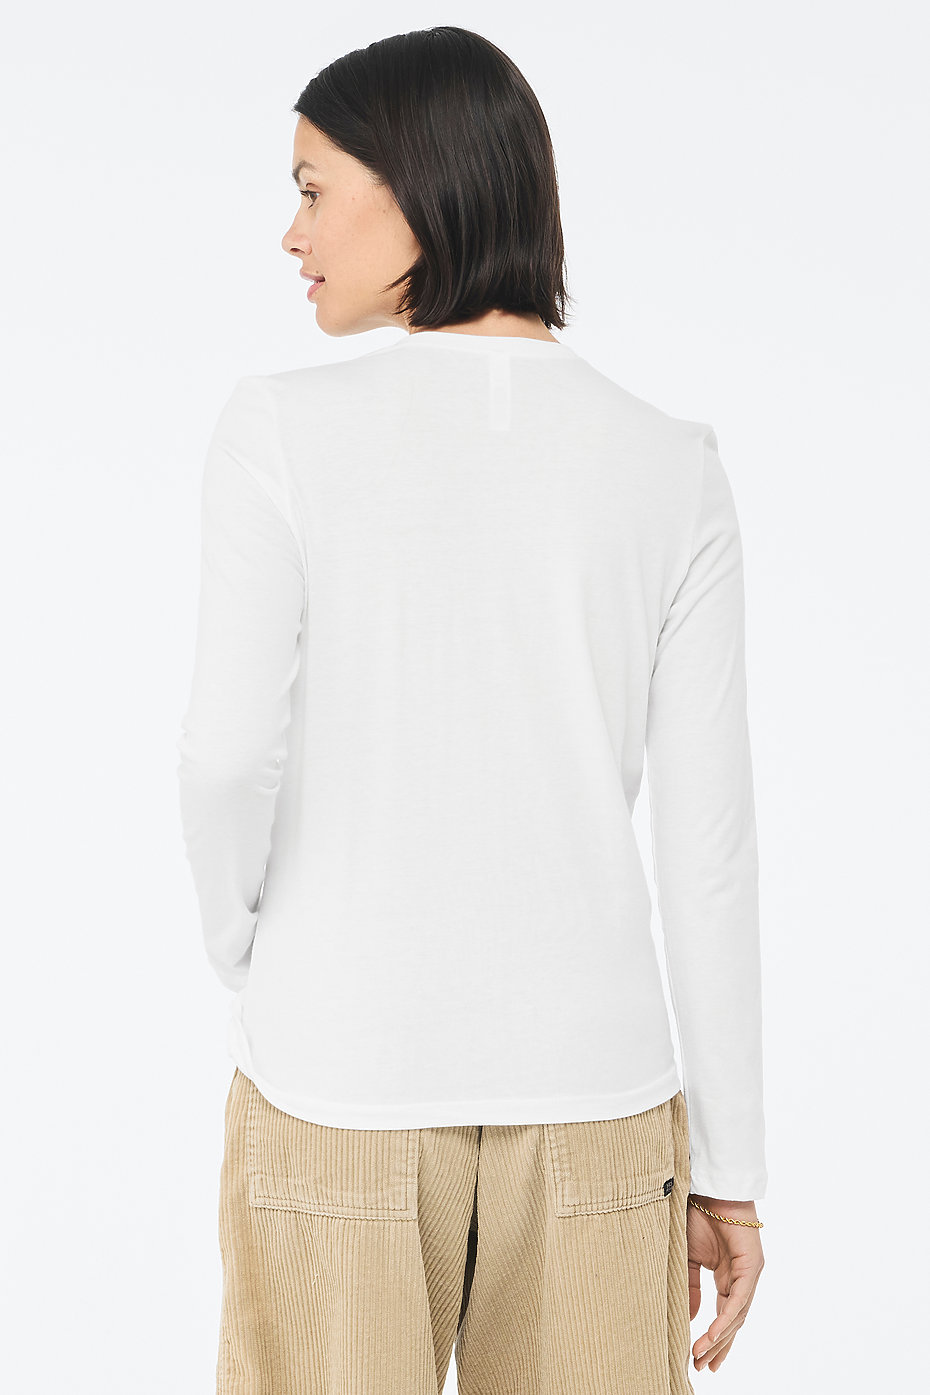 Custom Bella + Canvas - Women's Long Sleeve Thermal Shirt - DTLA Print